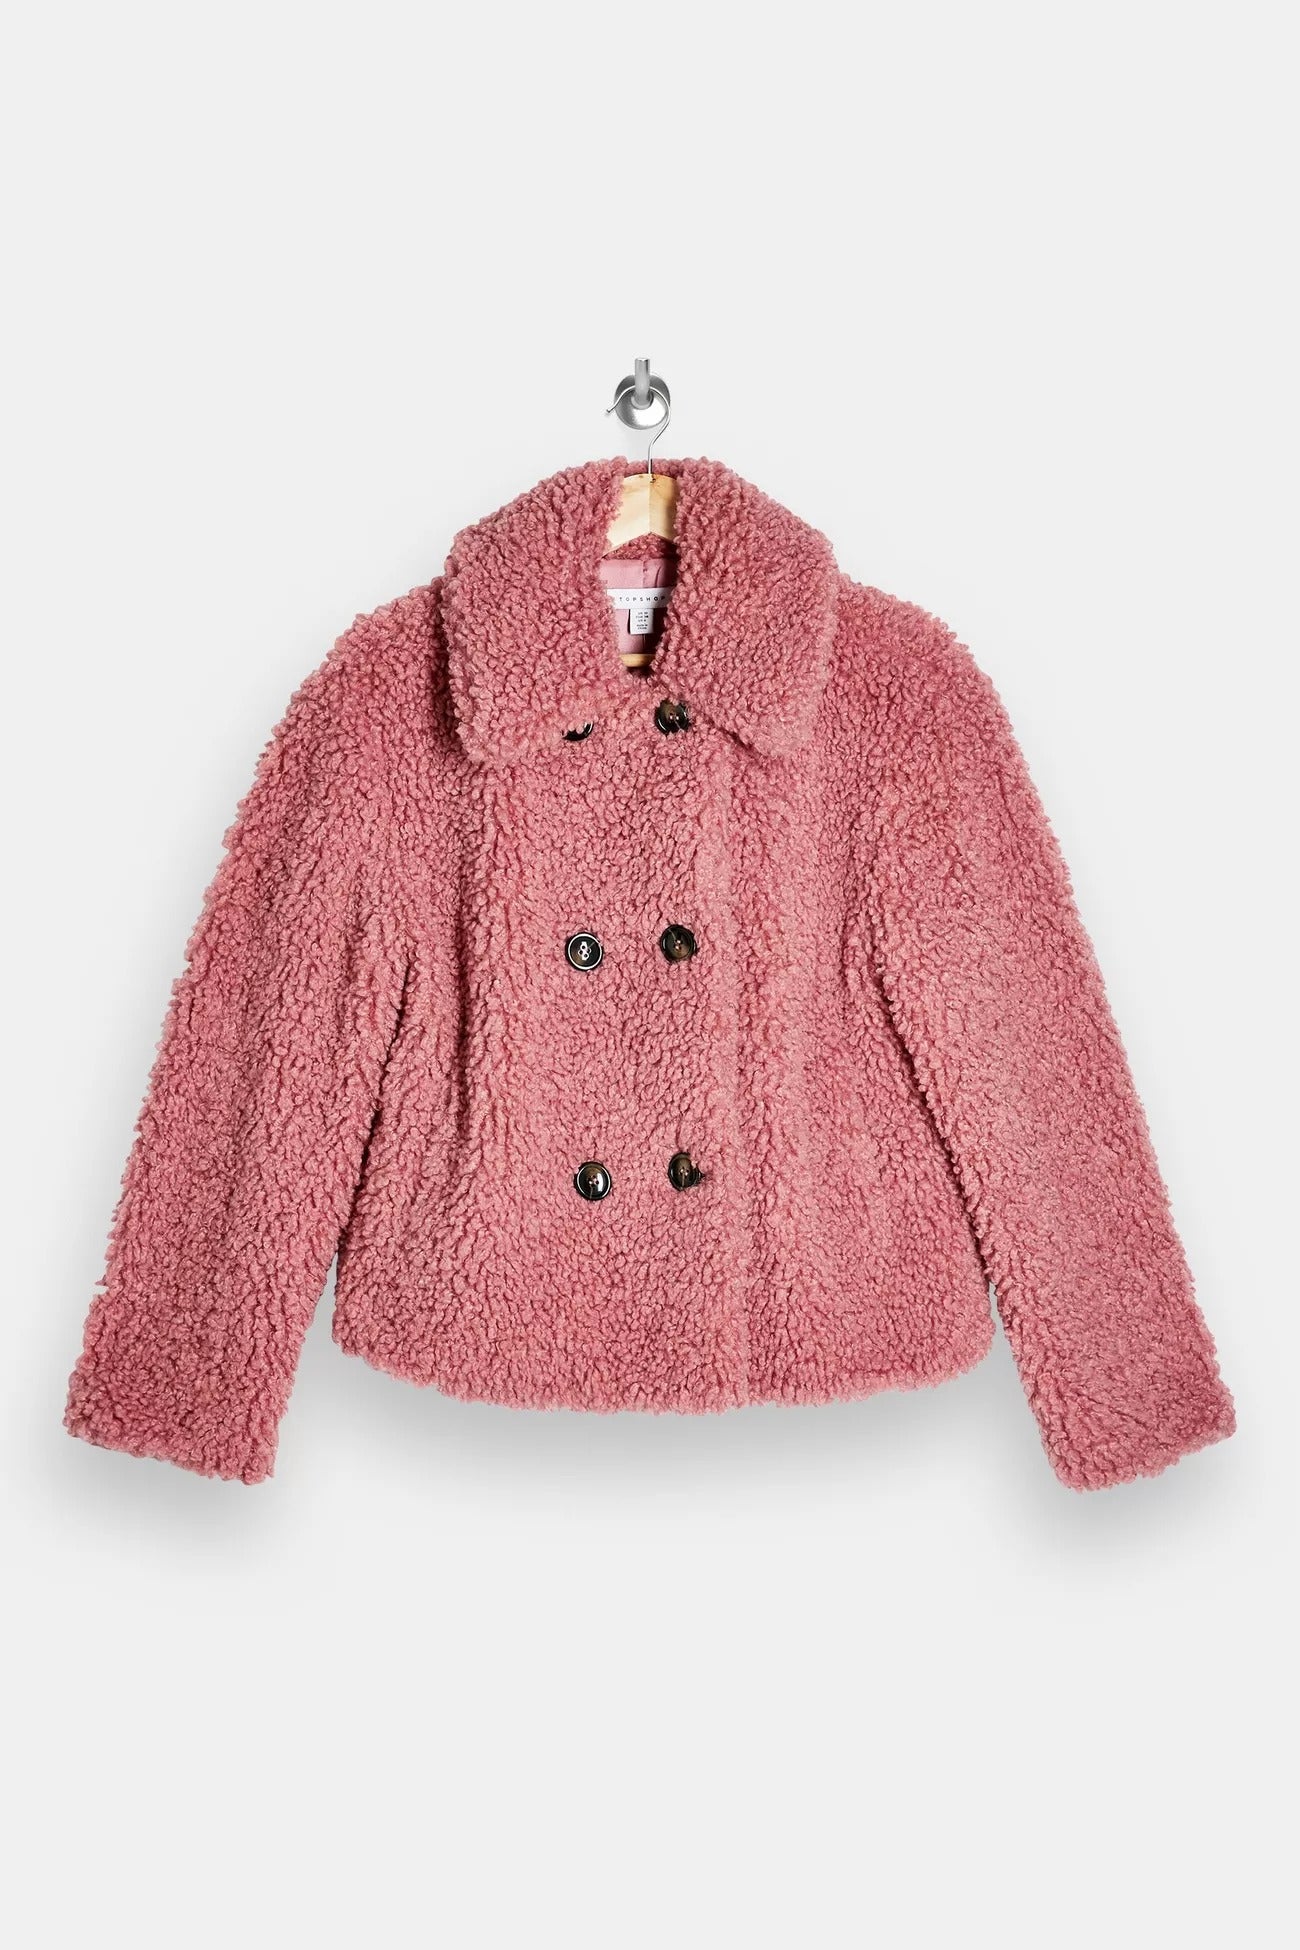 Topshop + Blush Pink Cropped Borg Coat